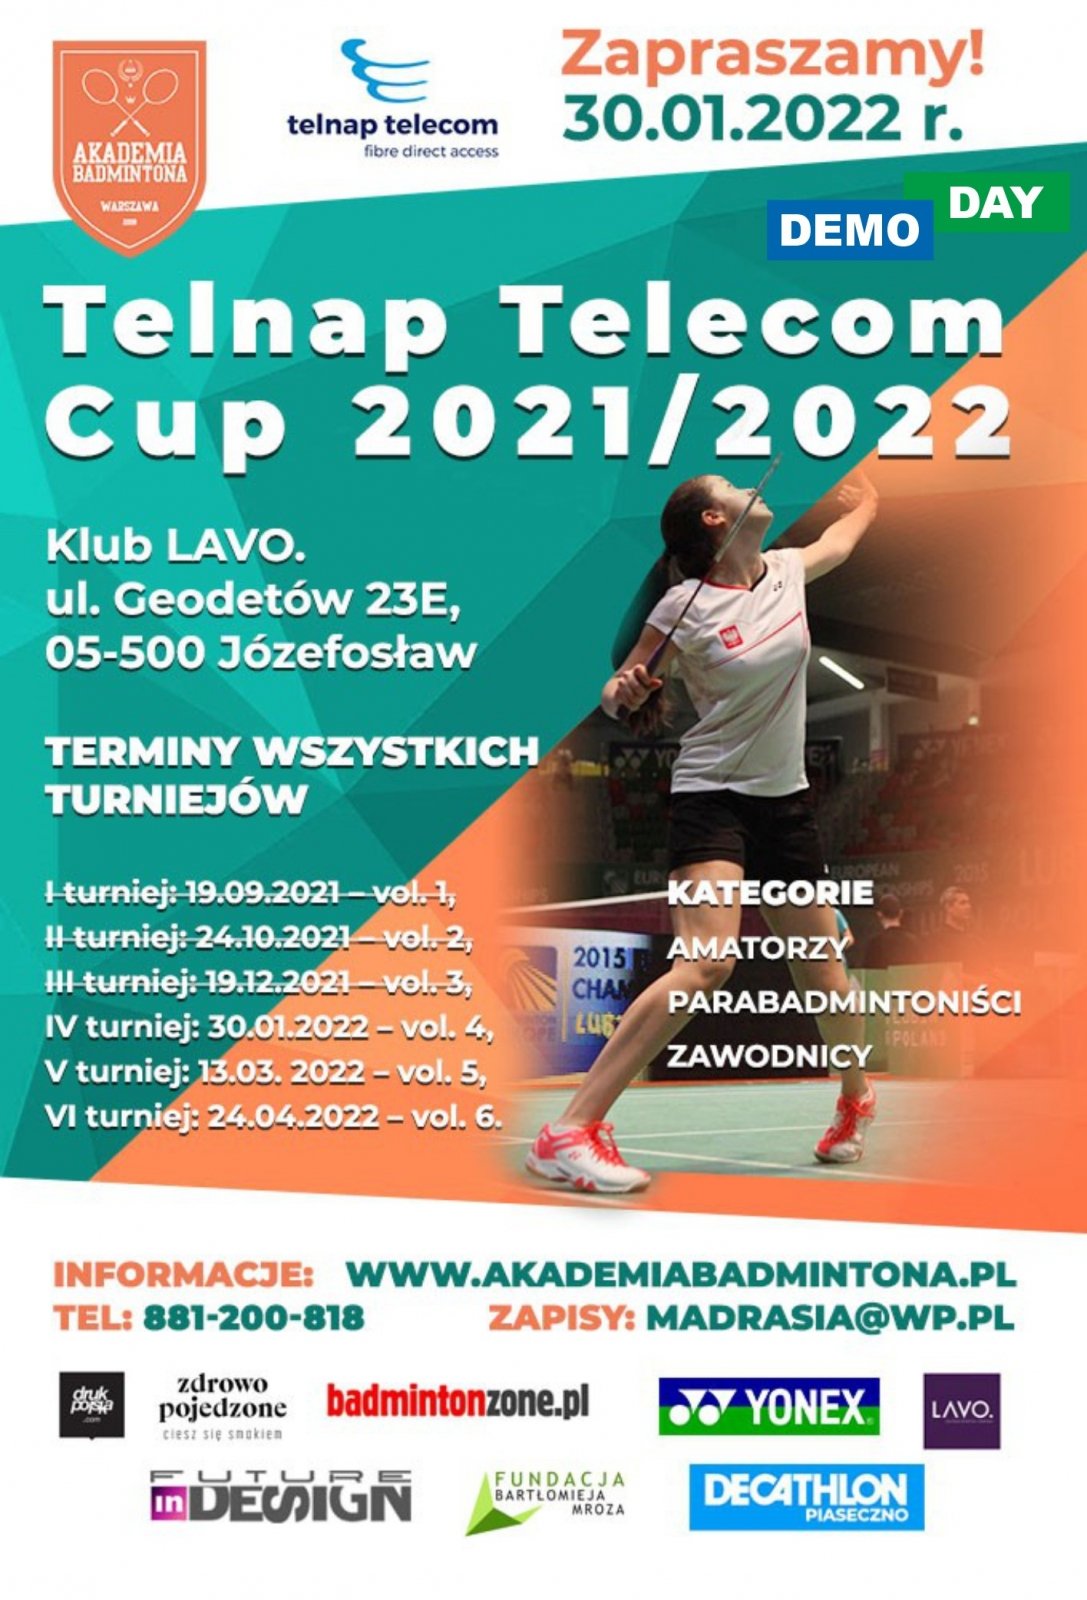 Dnia 30 stycznia rusza IV turniej Telnap Telecom Cup